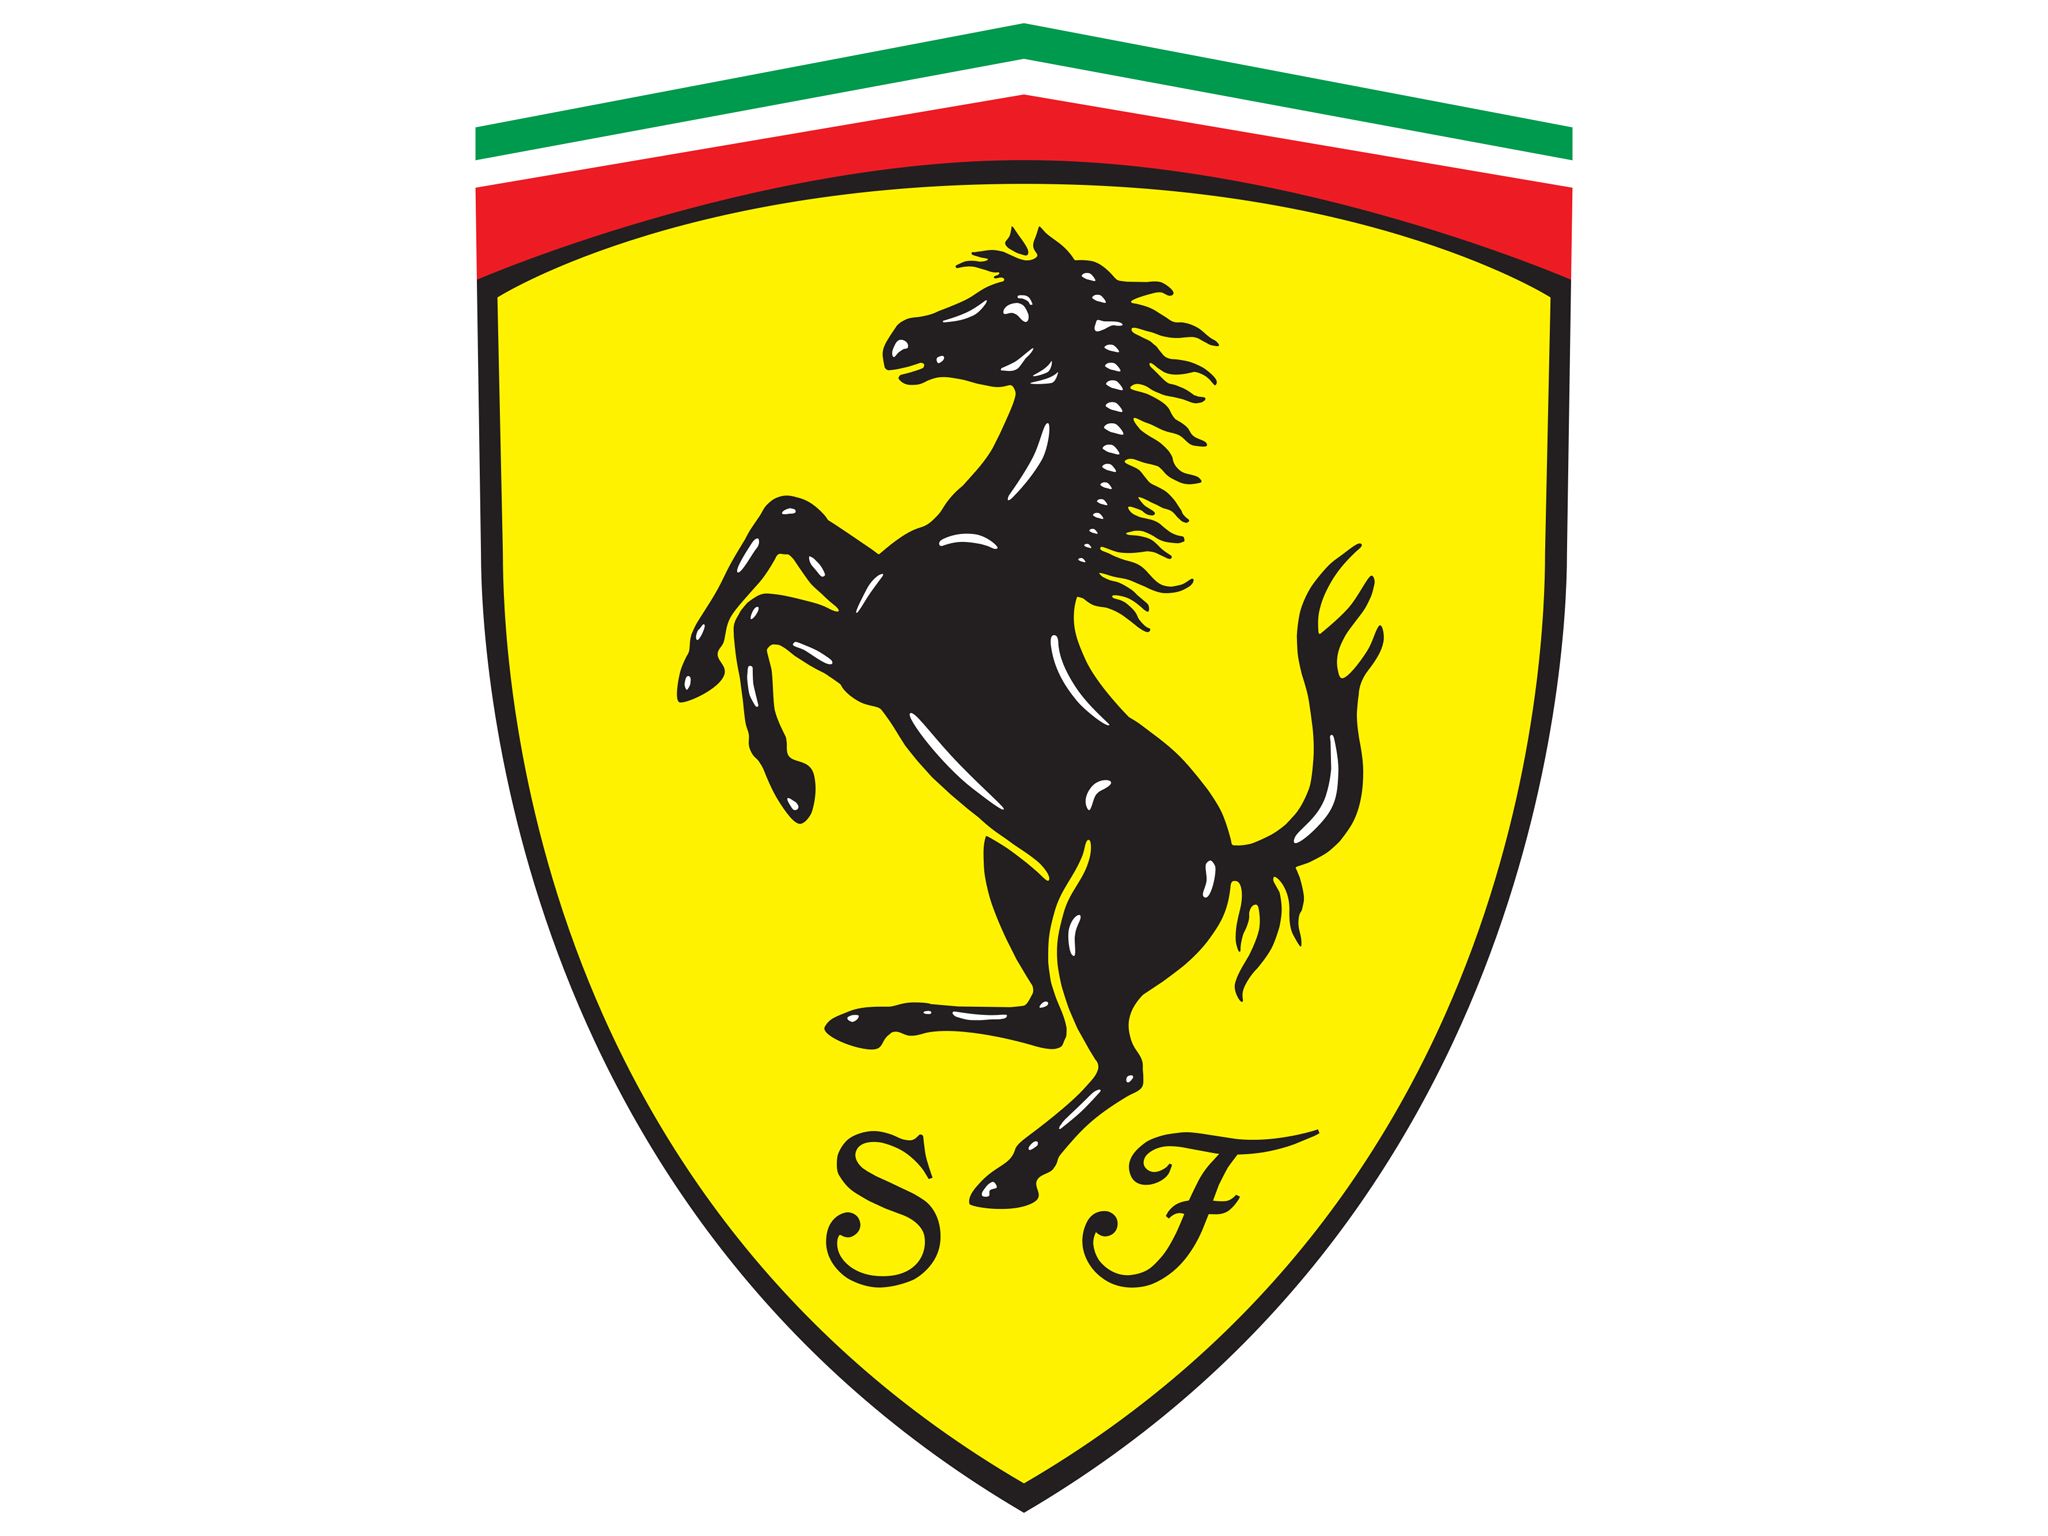 http://www.car-brand-names.com/wp-content/uploads/2015/03/Ferrari-emblem.jpg